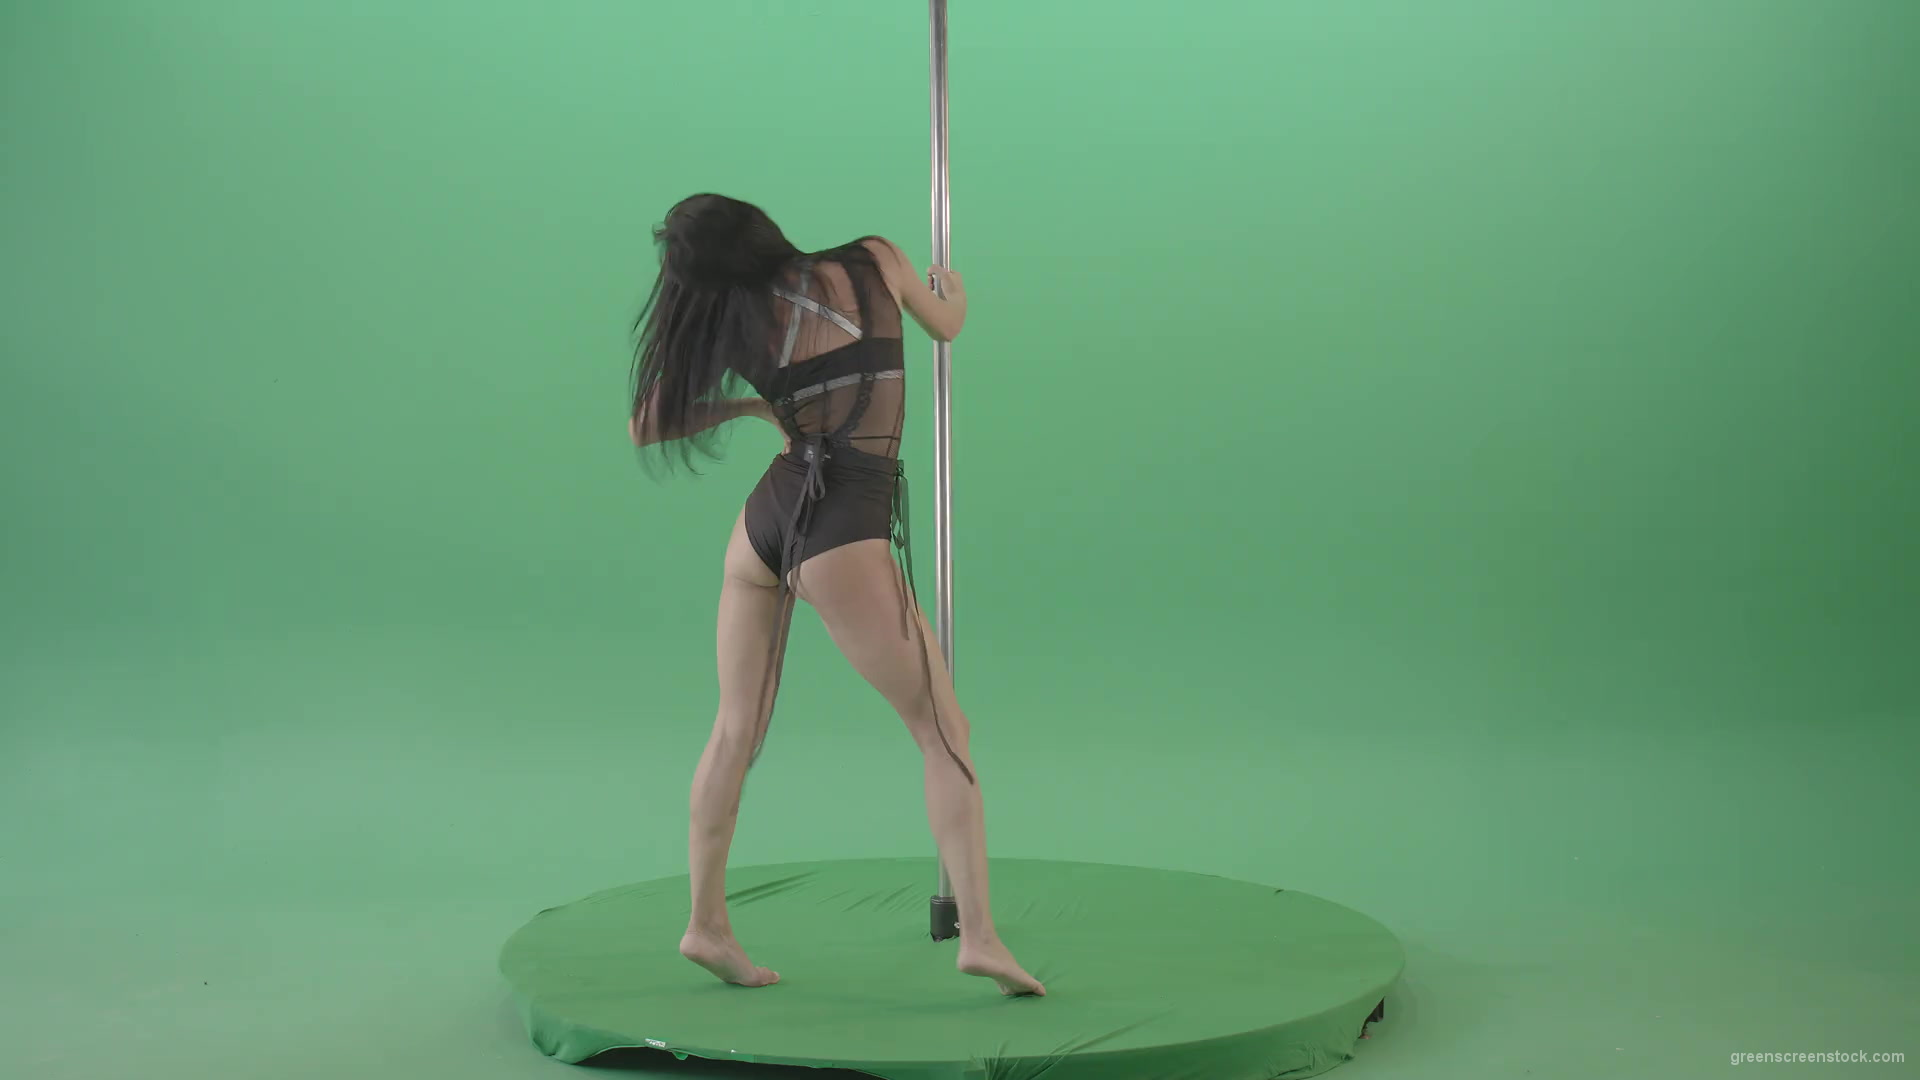 Strip pole videos